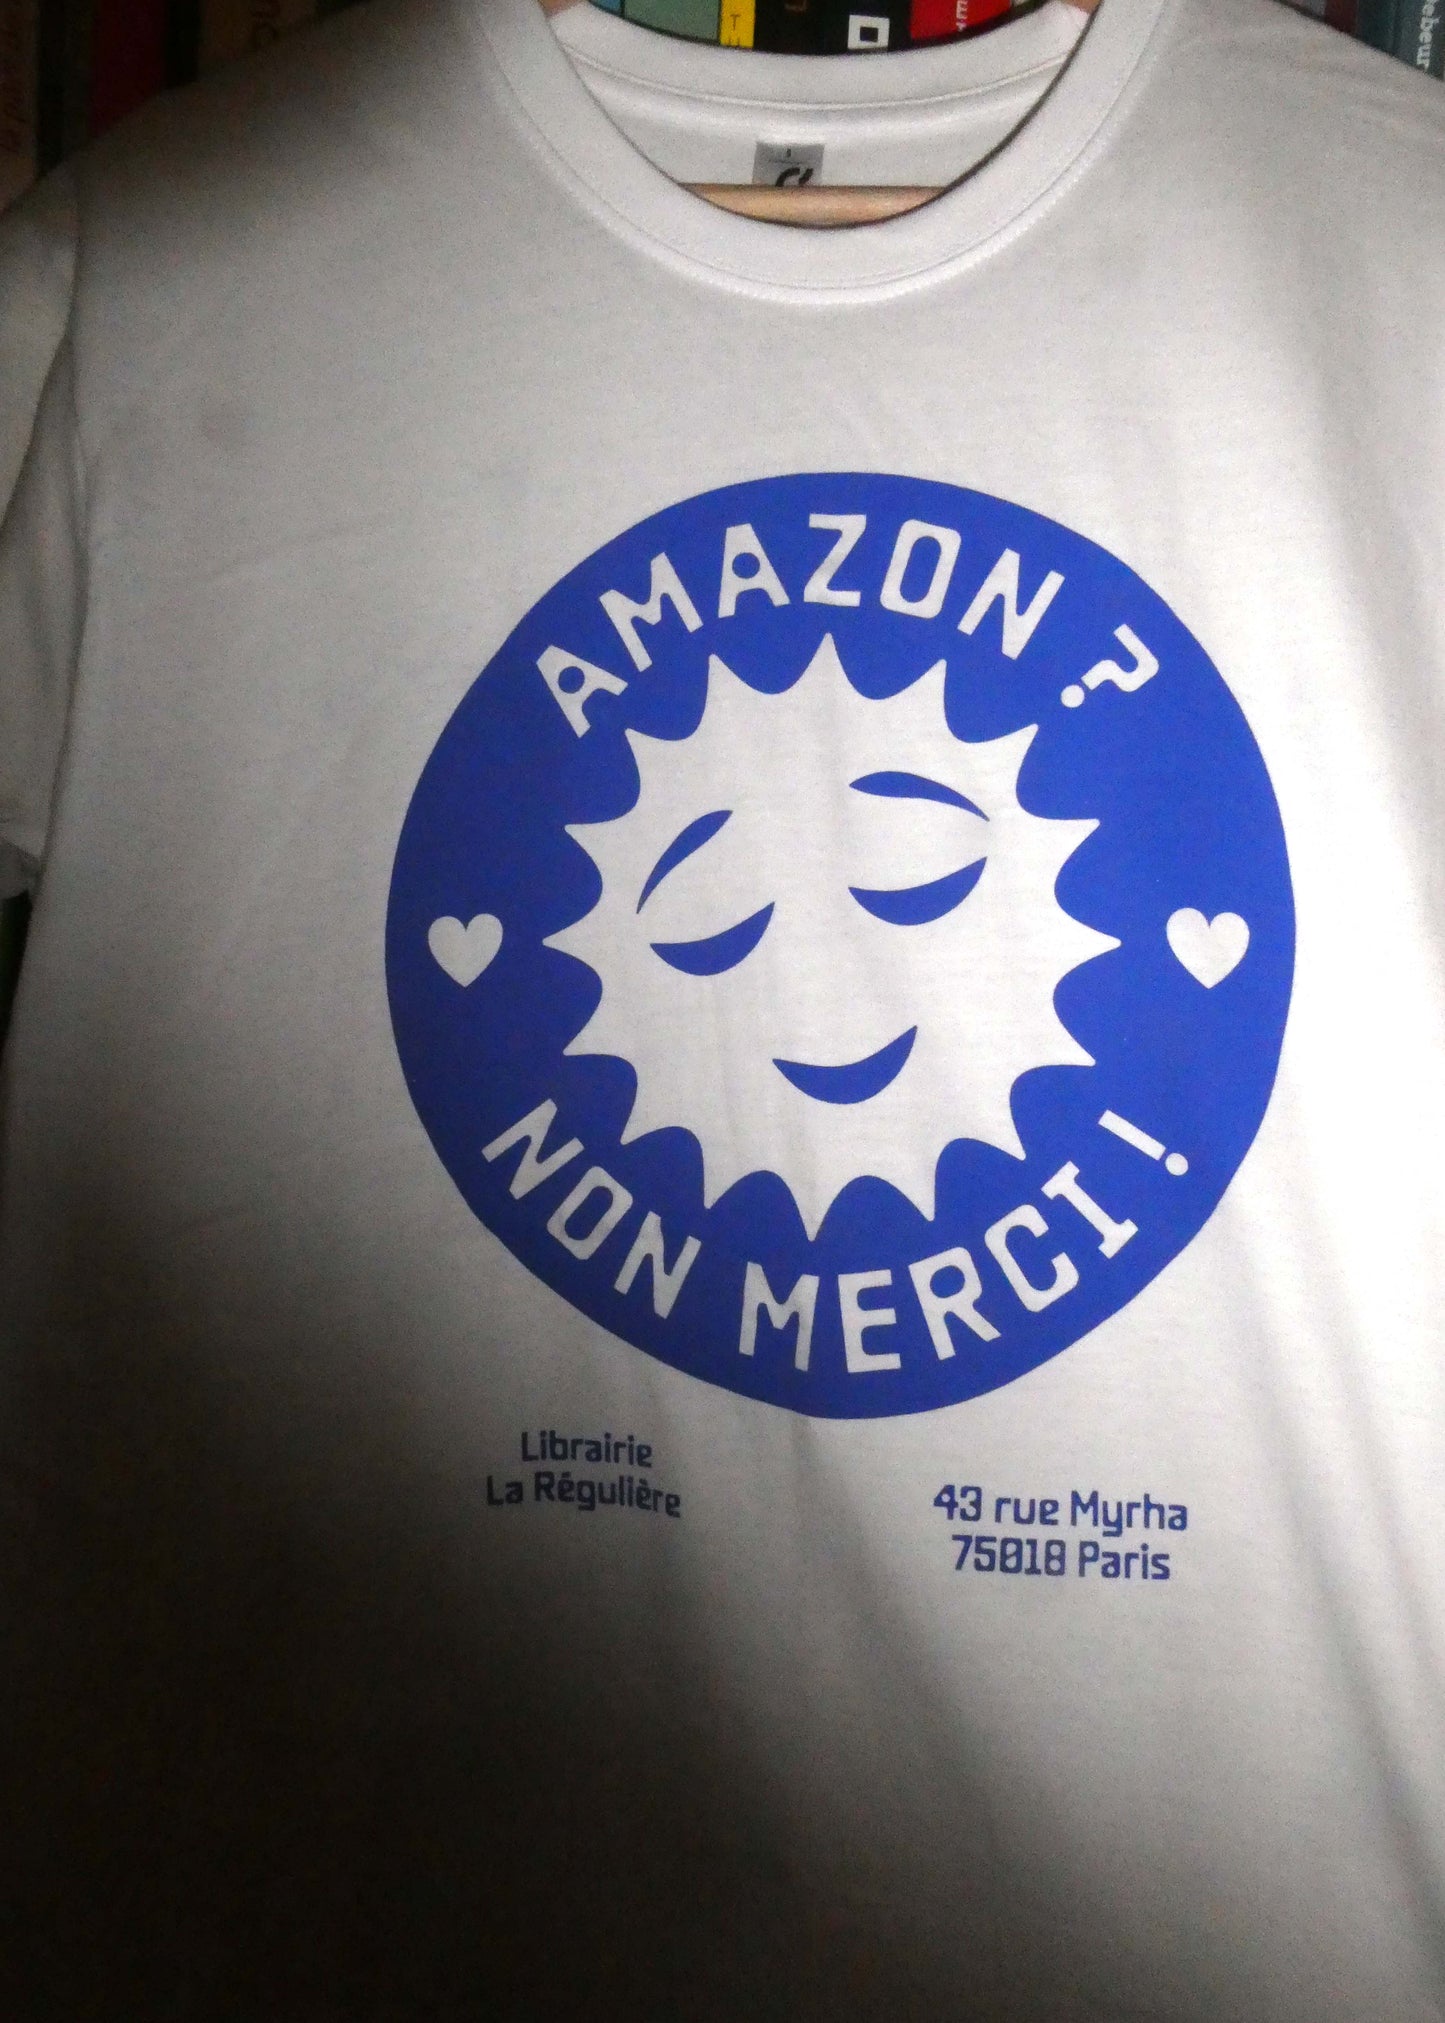 Tee-shirt "Amazon, non merci"